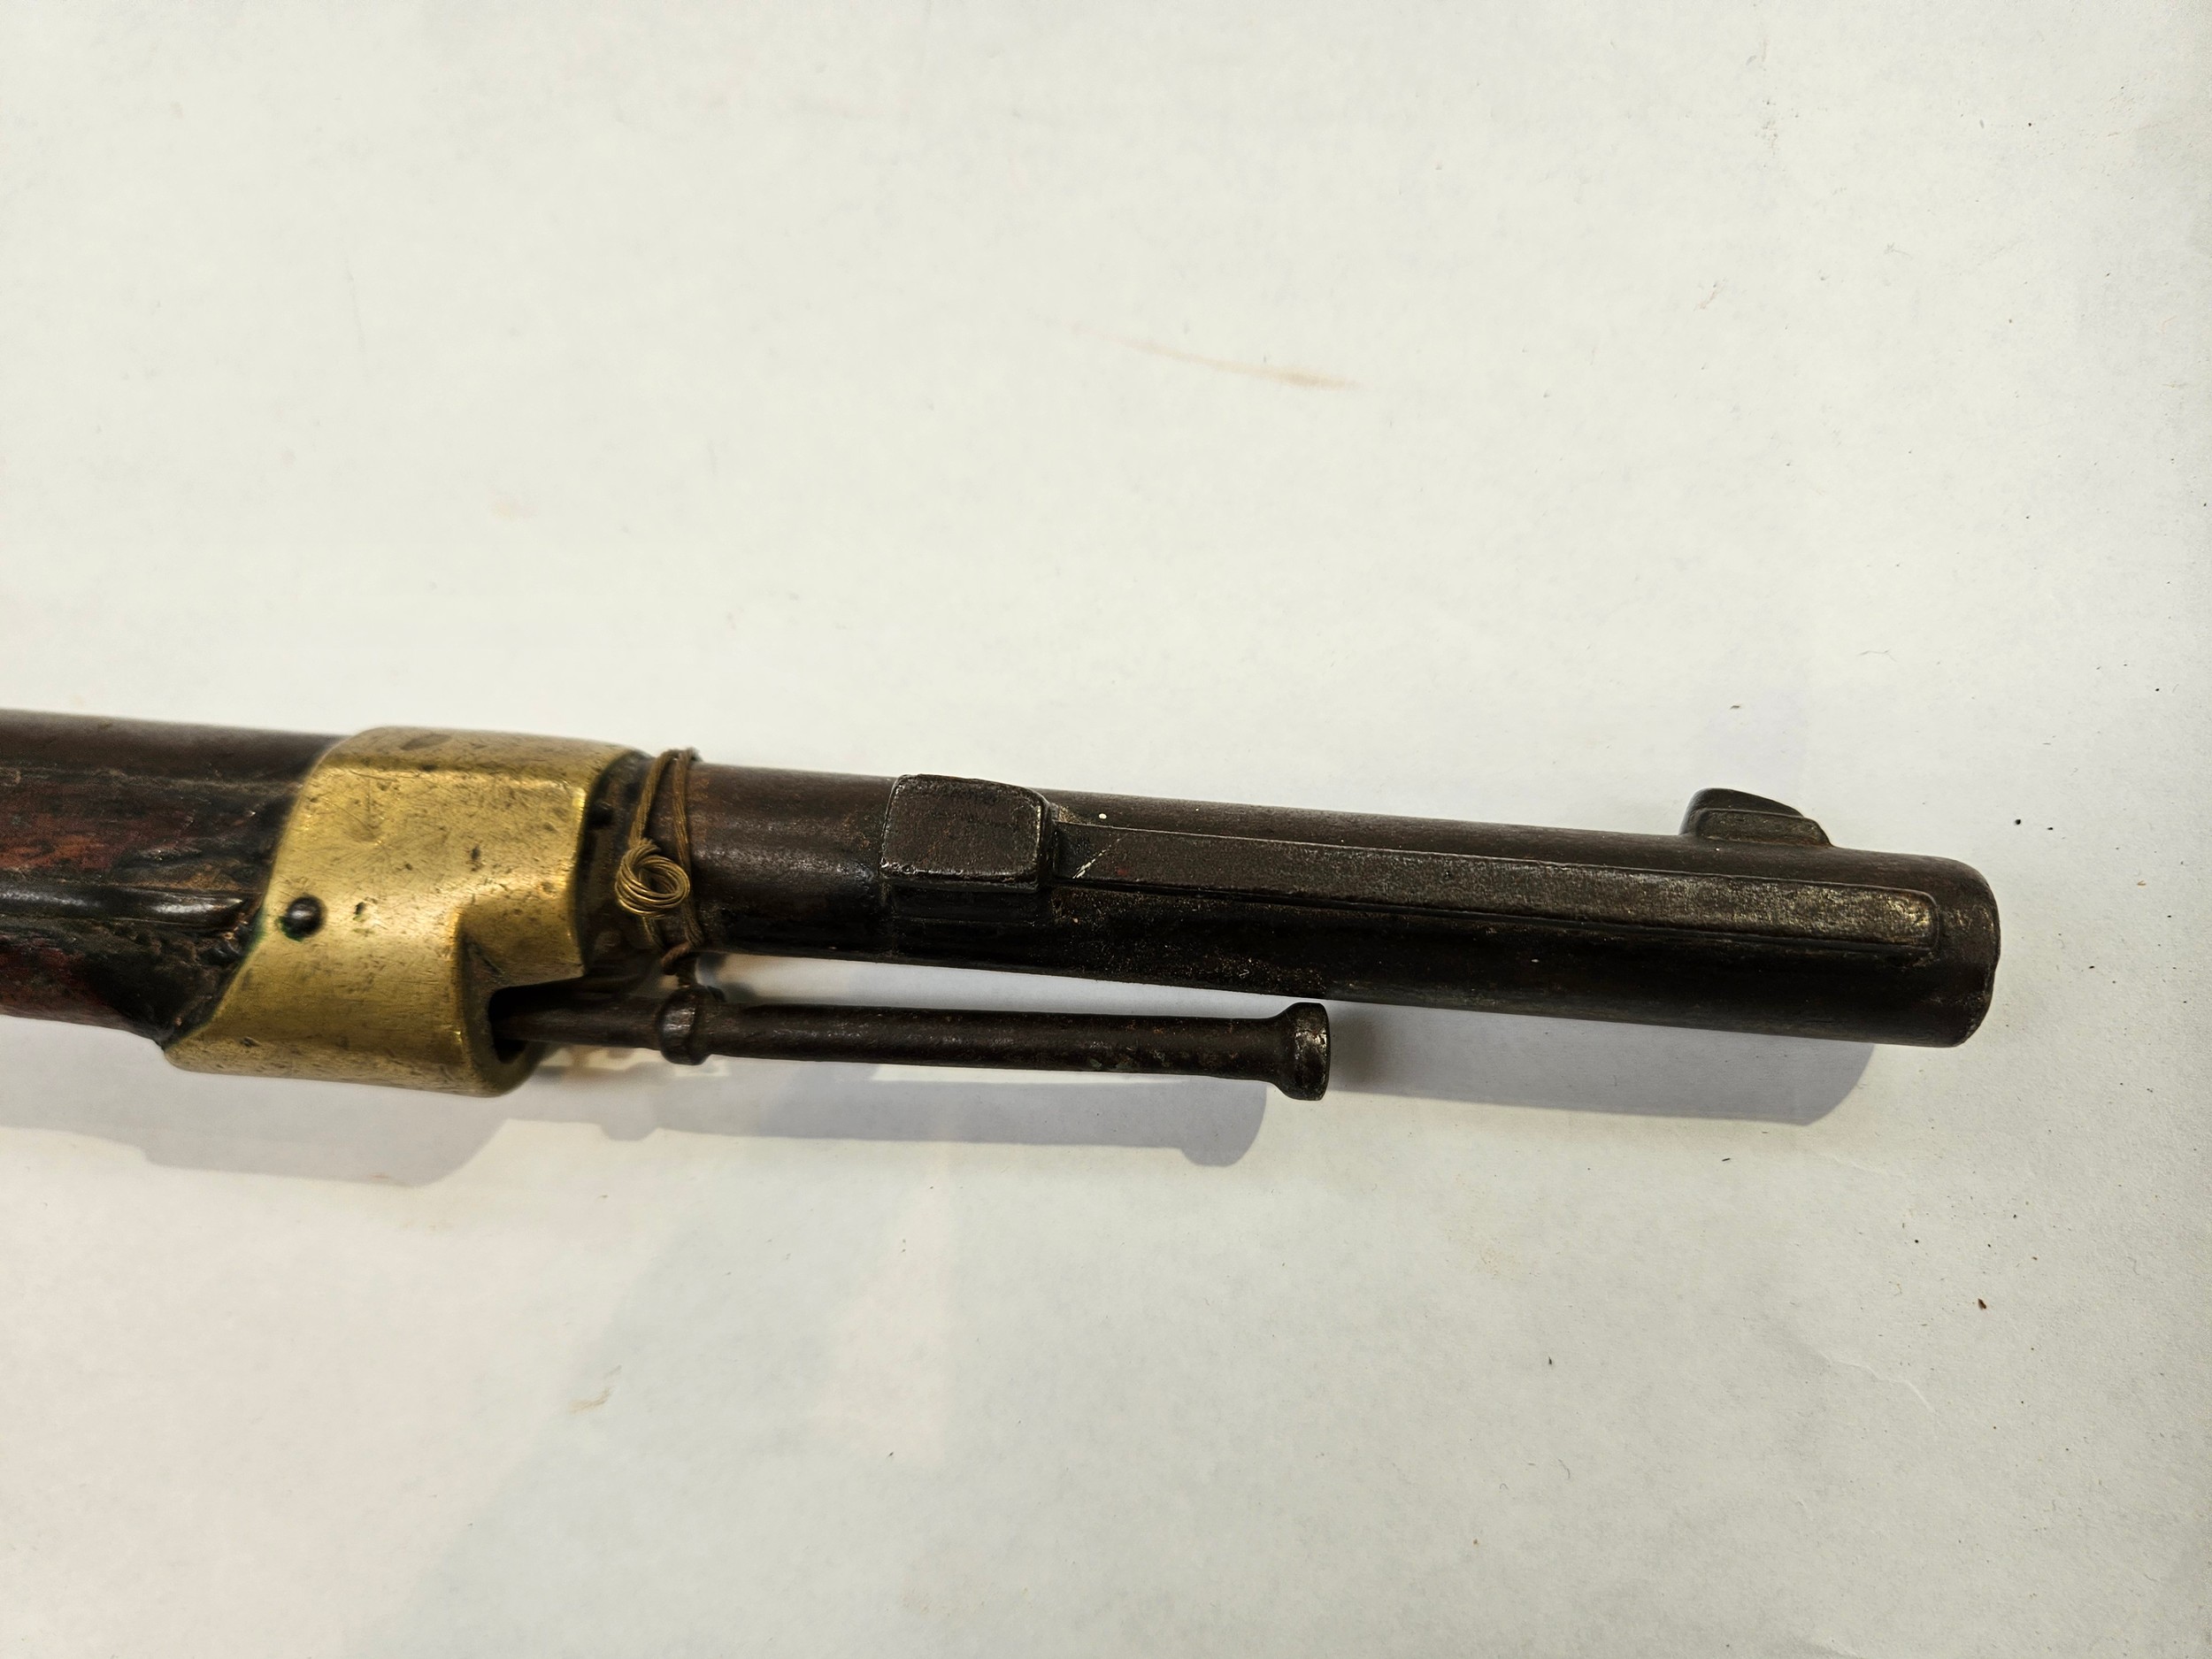 A Fusil Gras mle 1874 rifle, 11x59mmR Gras calibre, obsolete calibre. No license required - Image 5 of 8